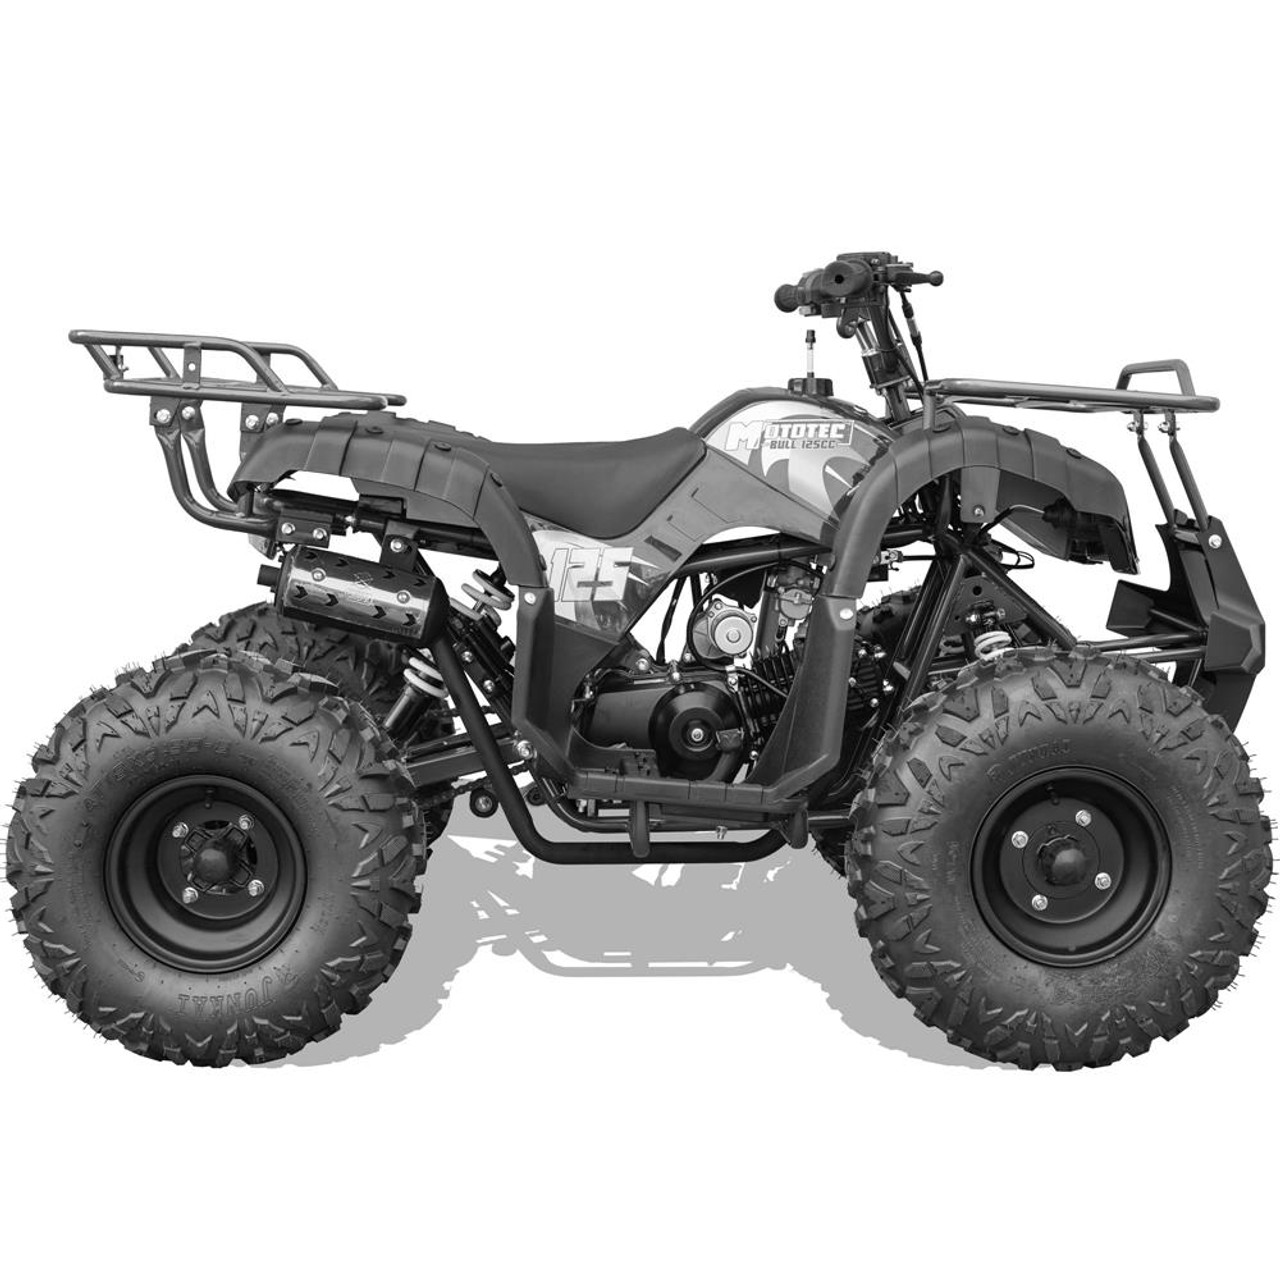 BTUMT-ATV-Bull-125cc-Black_5